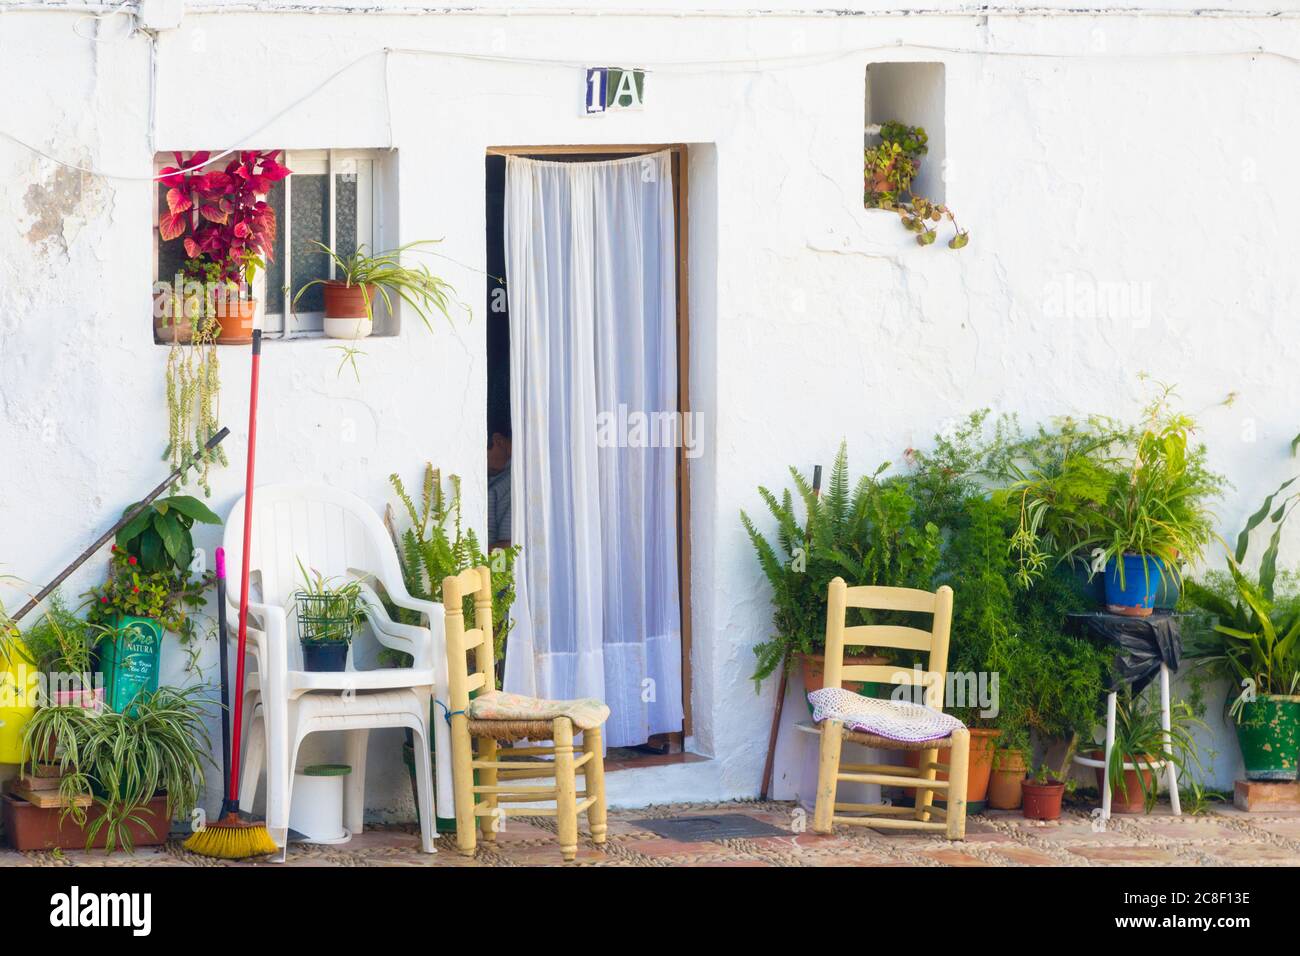 Front of typical house in Plaza Santo Cristo, Marbella, Costa del Sol, Malaga Province, Andalusia, southern Spain. Stock Photo